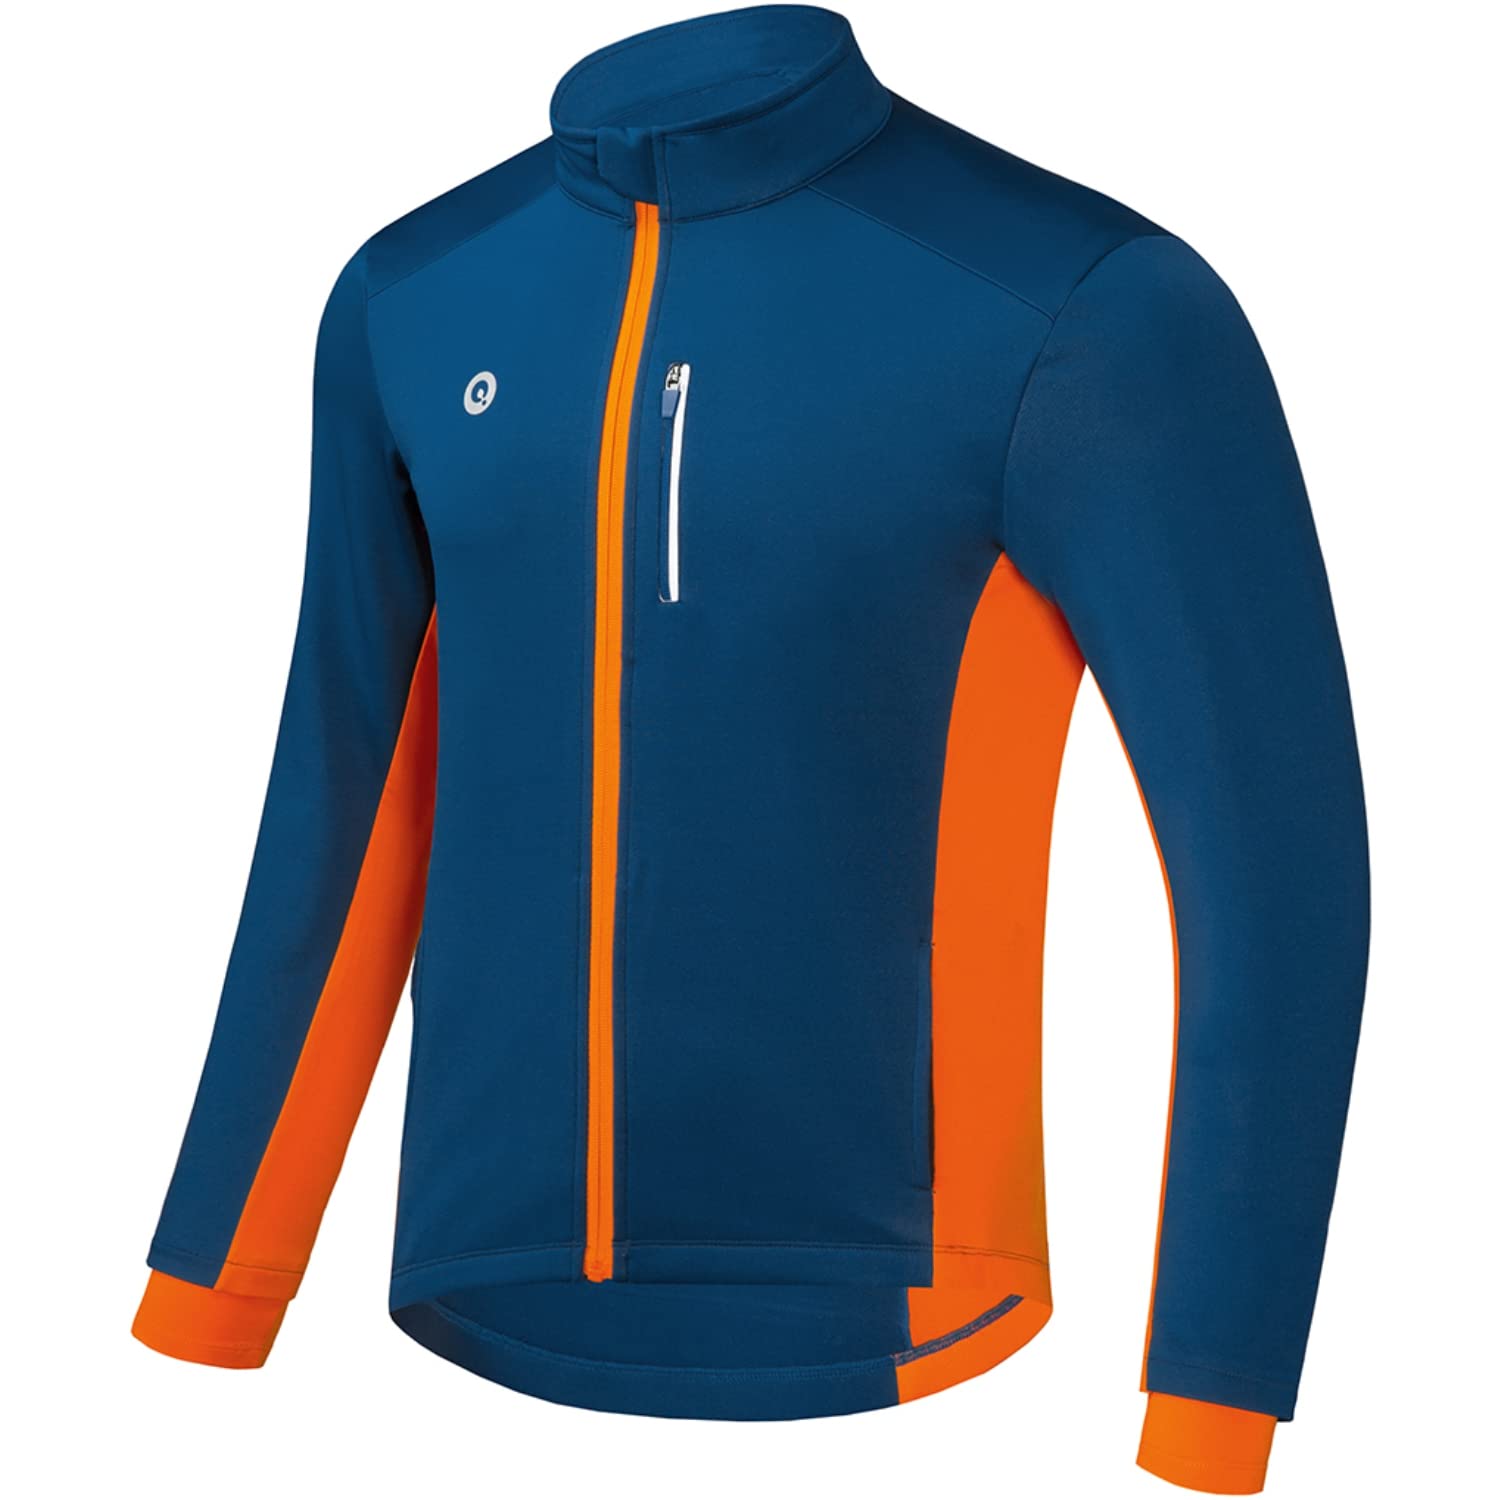 Przewalski Cycling Bike Jackets for Men Winter Thermal Running Jacket Windproof Breathable Reflective Softshell Windbreaker (Blue, XX-Large)